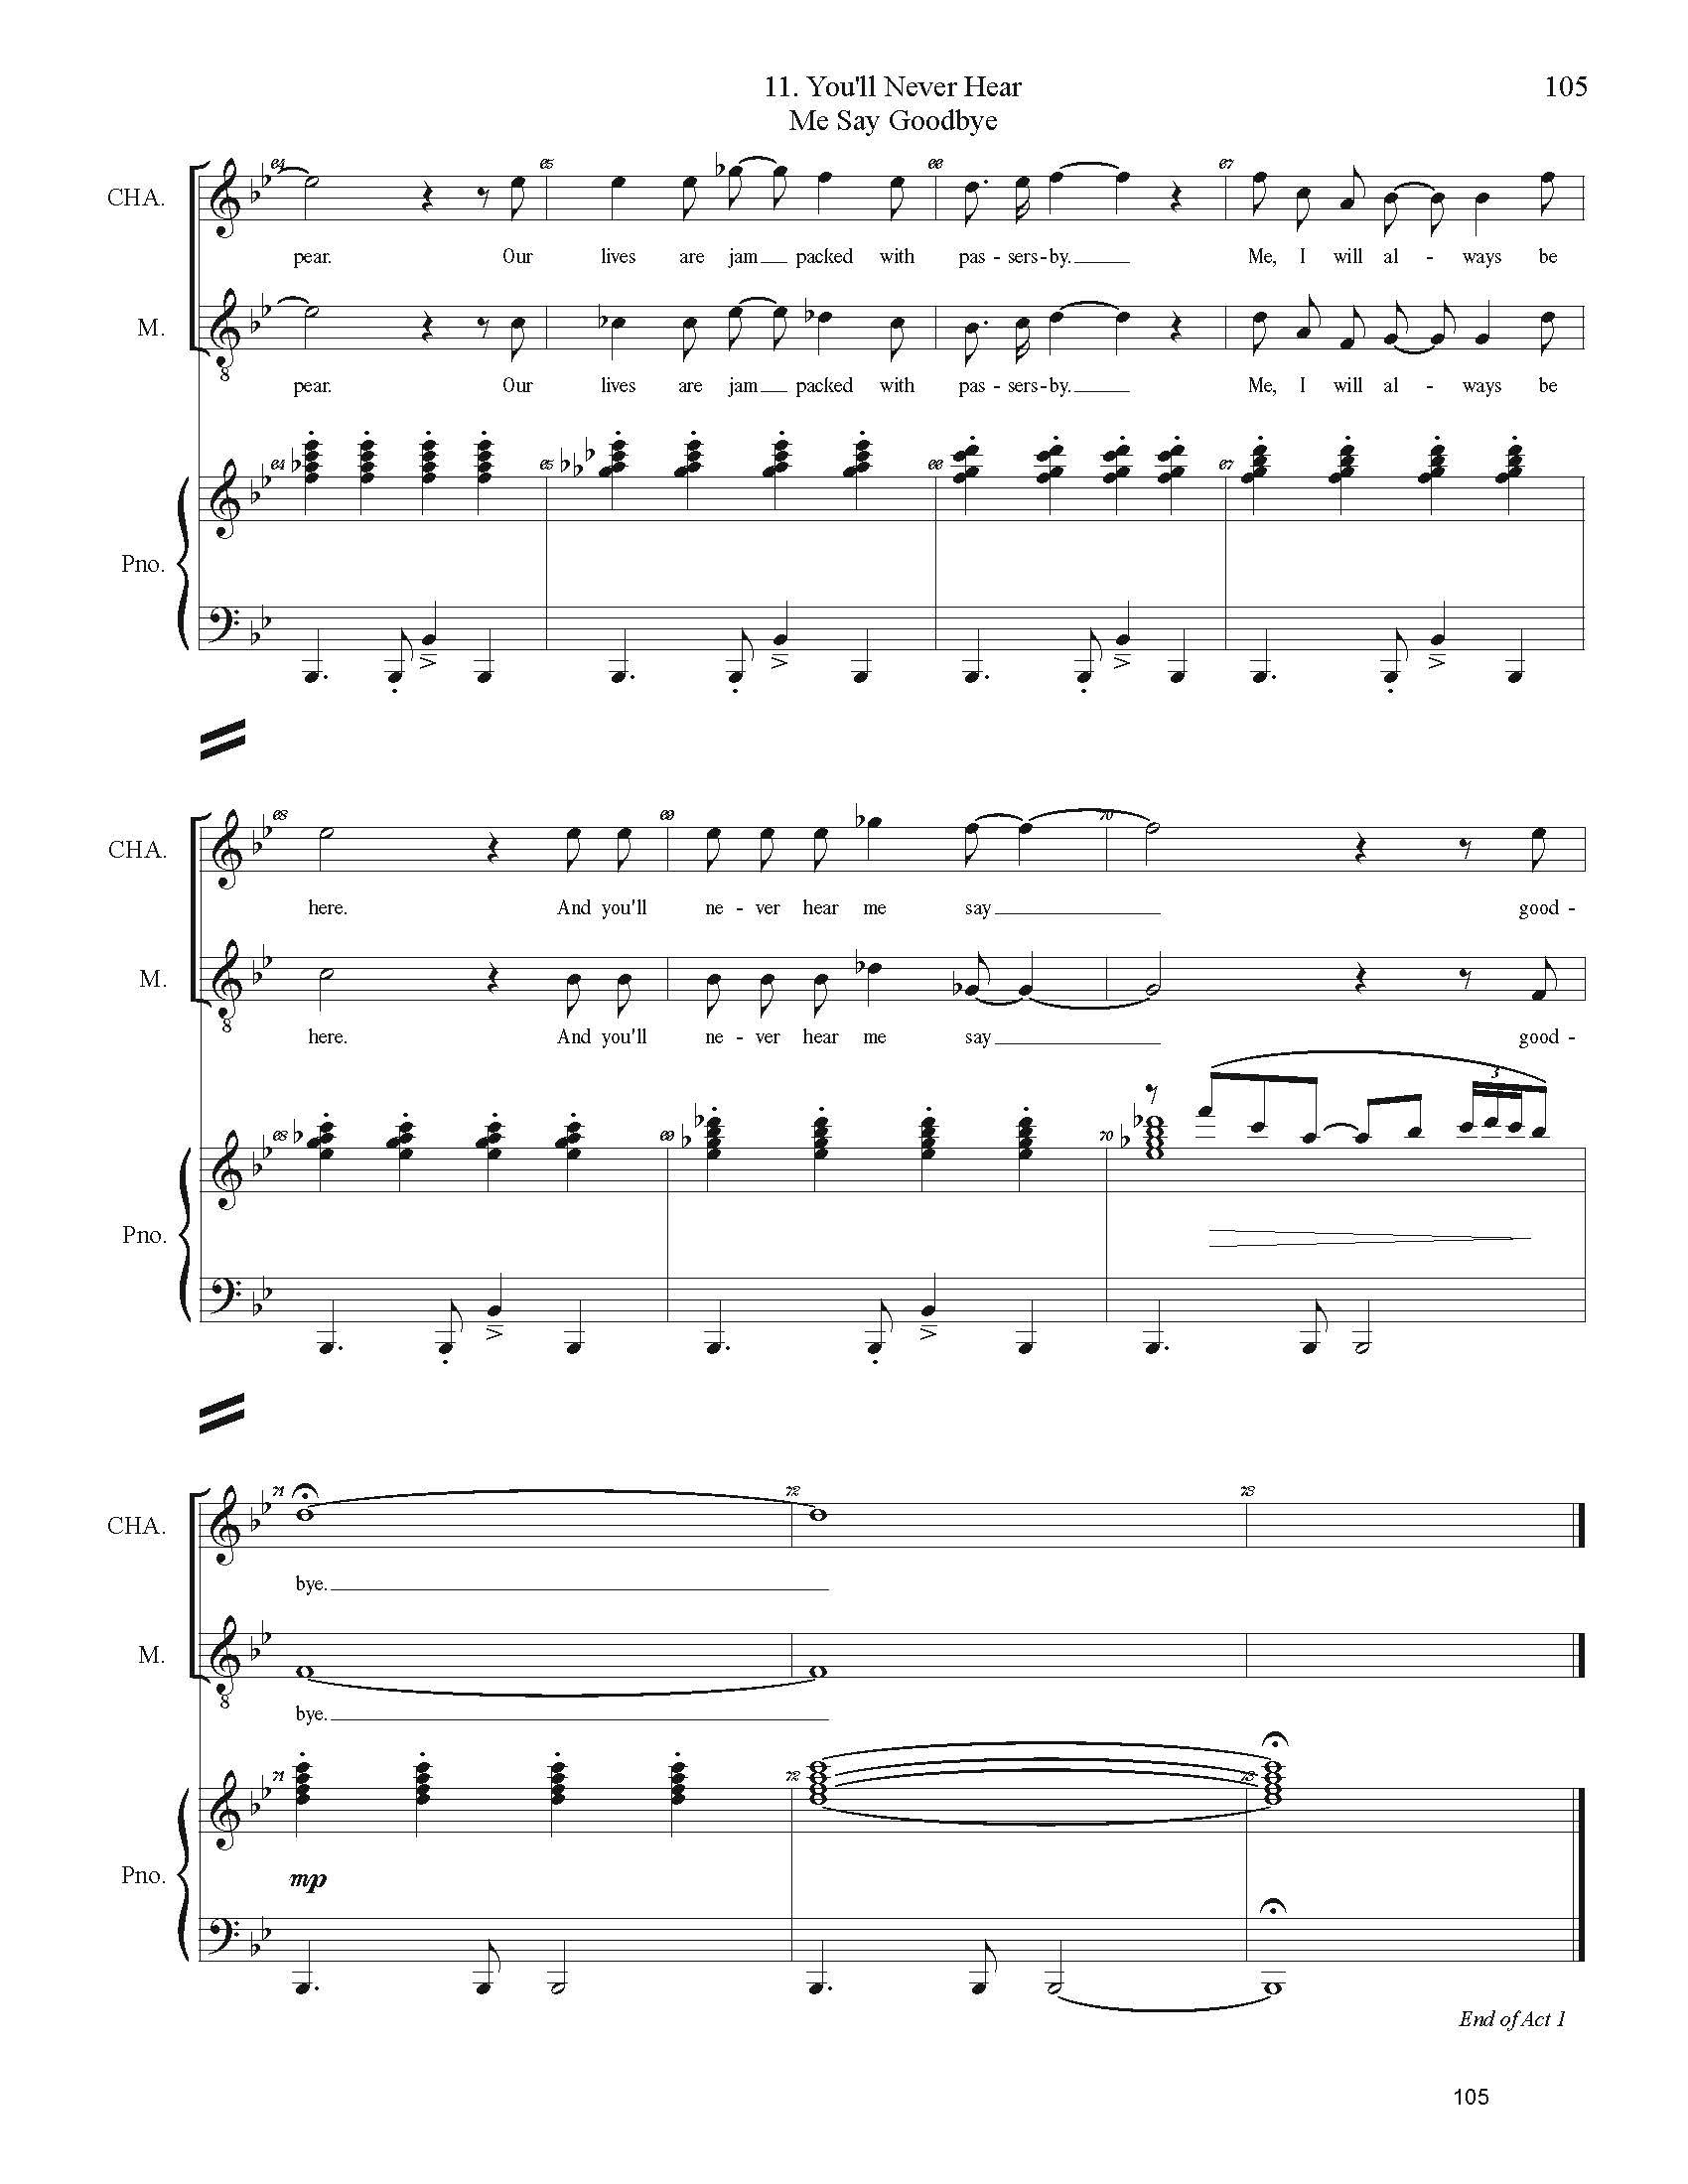 FULL PIANO VOCAL SCORE DRAFT 1 - Score_Page_105.jpg